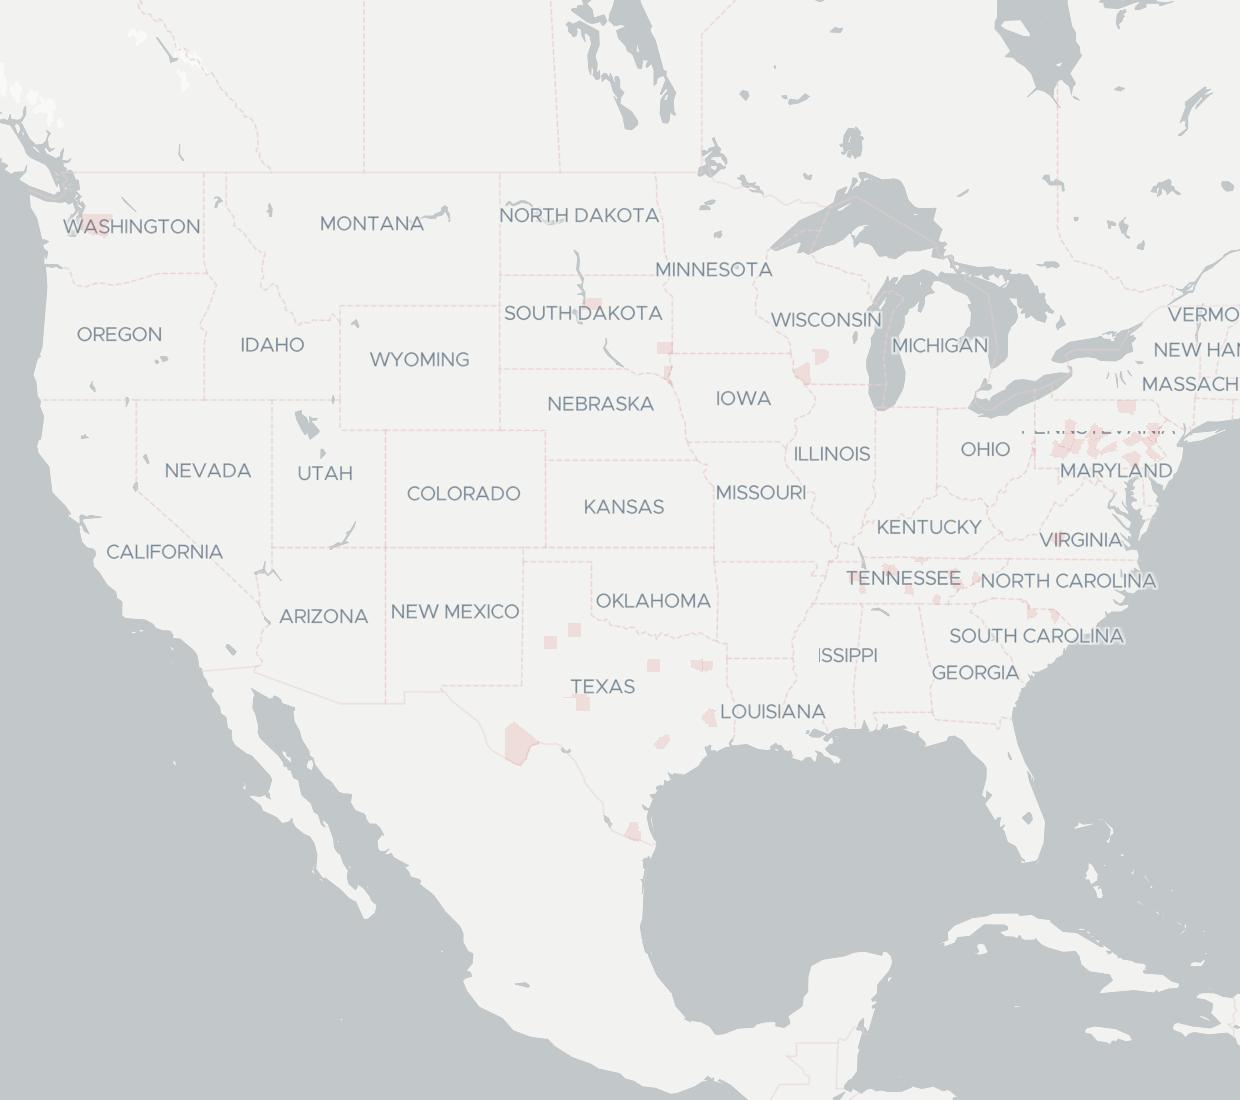 Kentucky Fi Availability Map. Click for interactive map